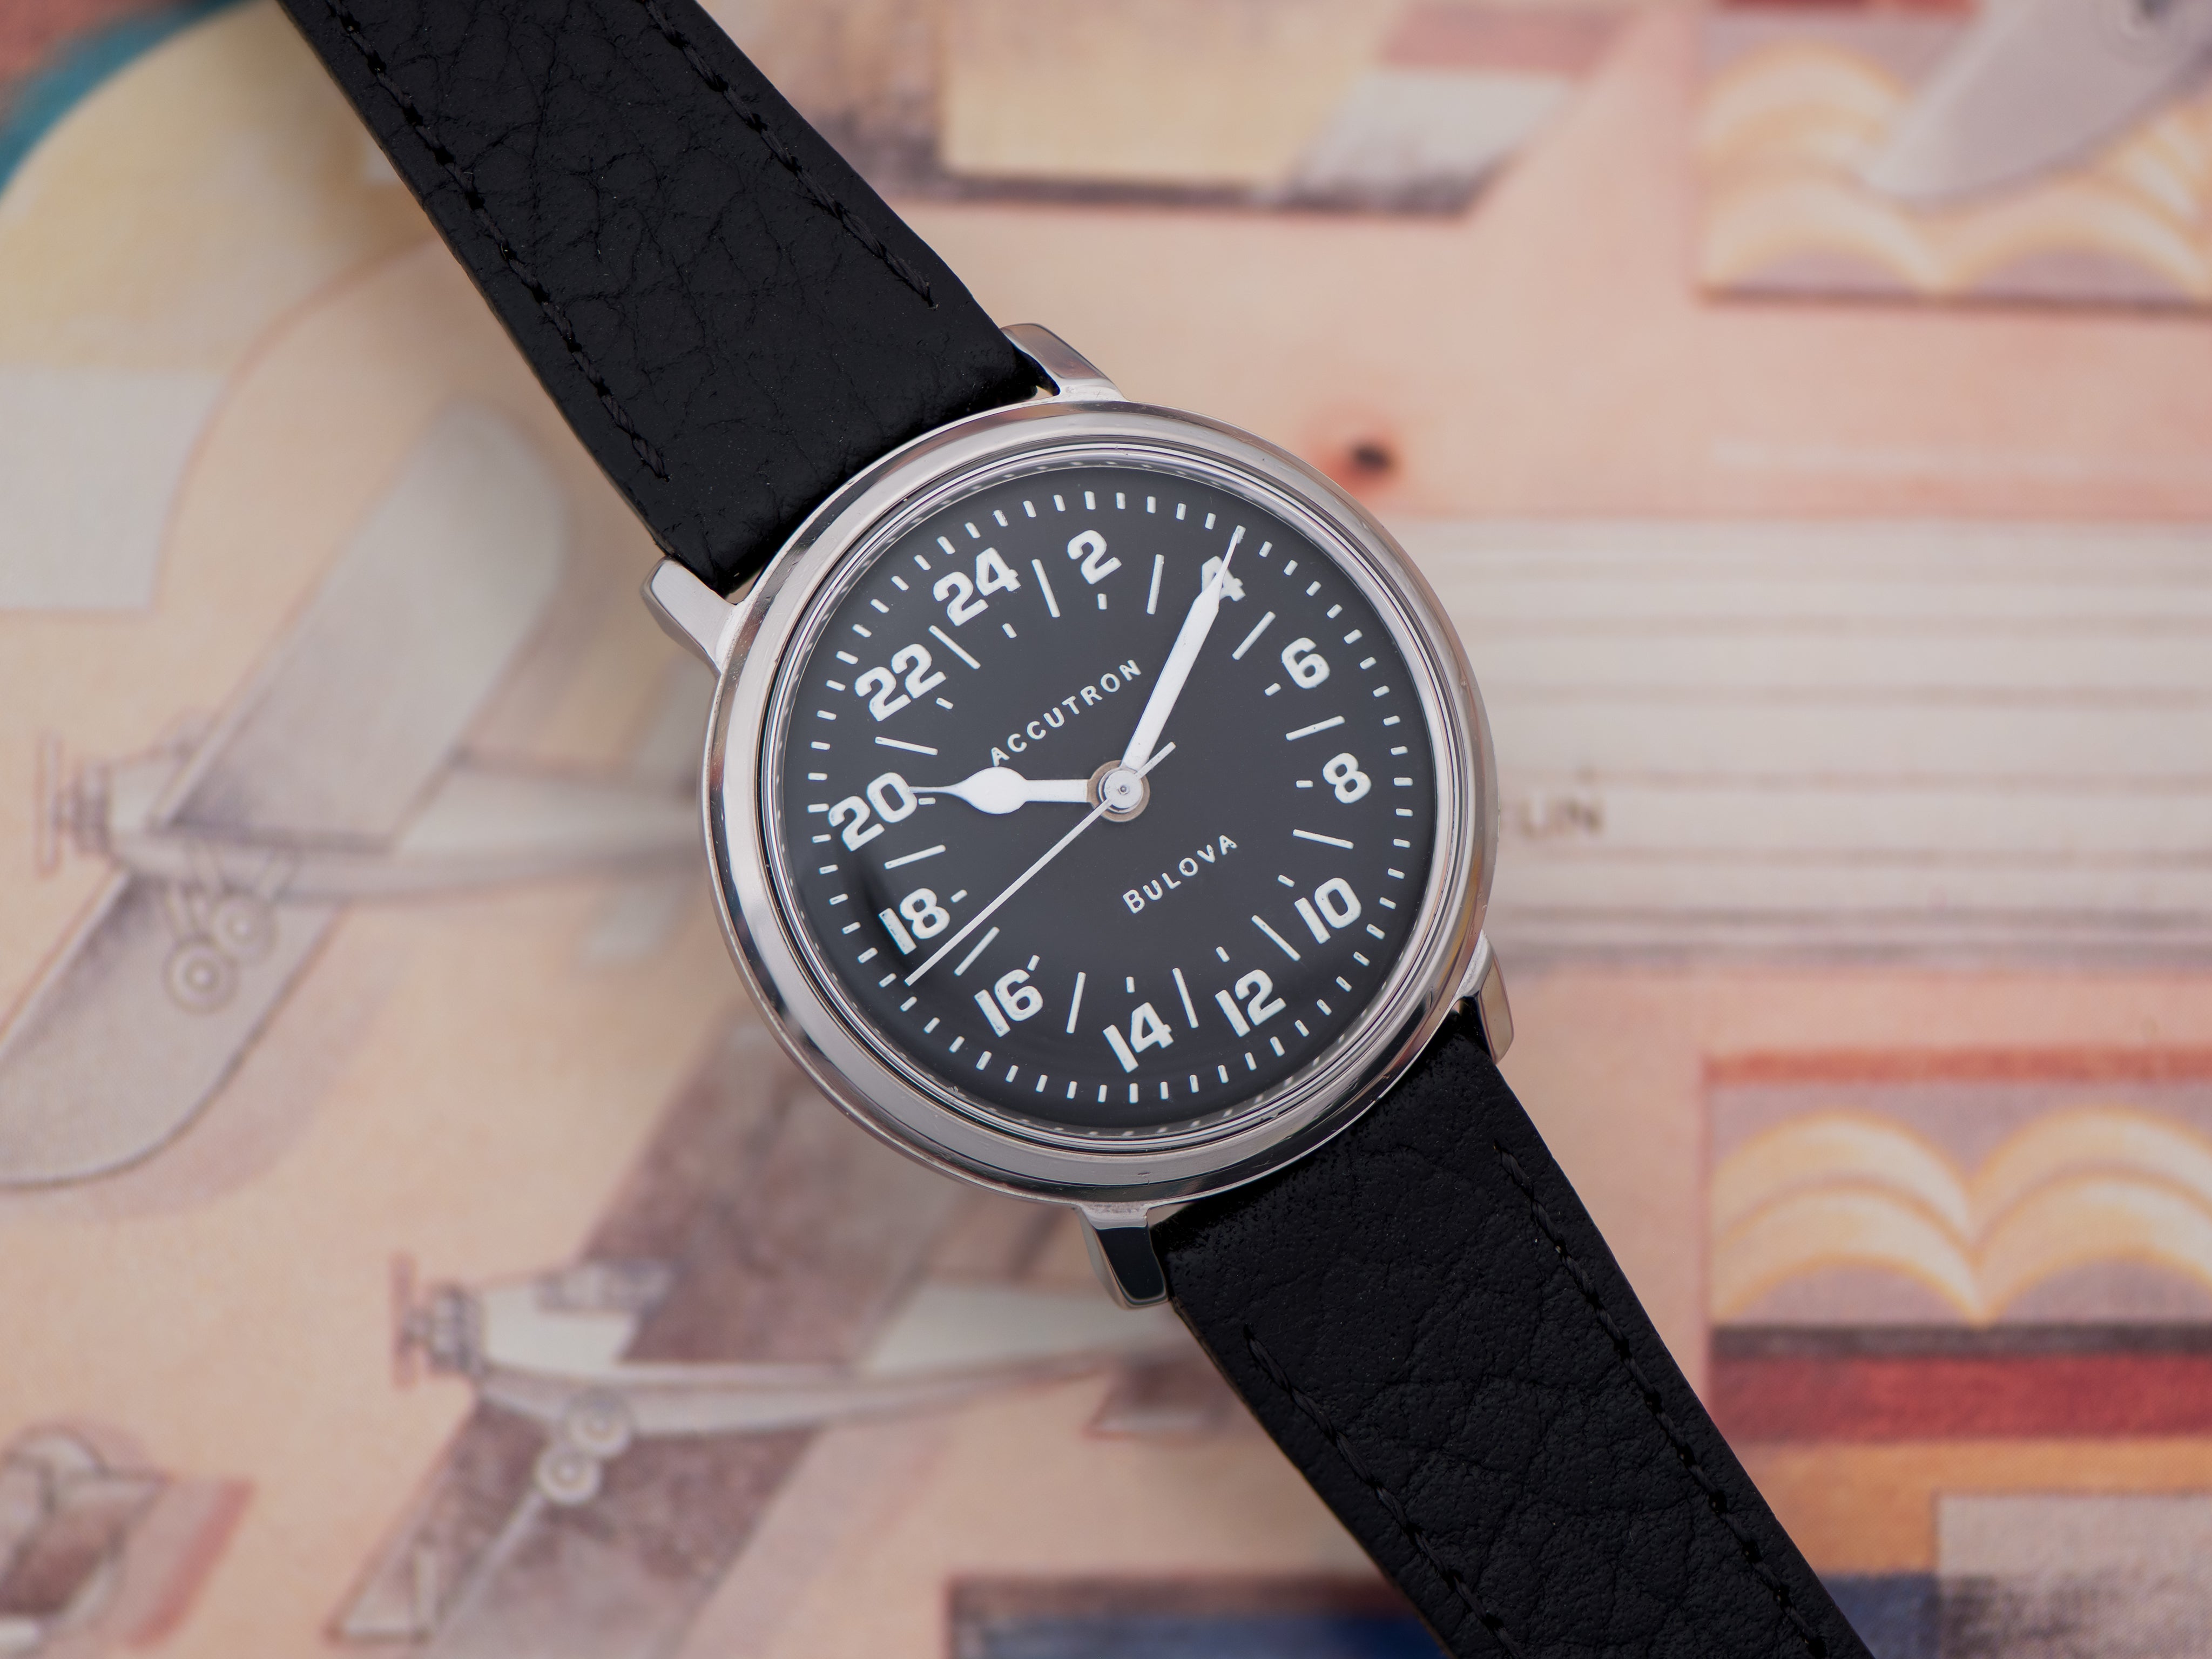 Bulova Accutron Custom True 24 Hour Dial Stainless Steel Watch 44057c56 af6f 4d3f 894d f5a92acf563f